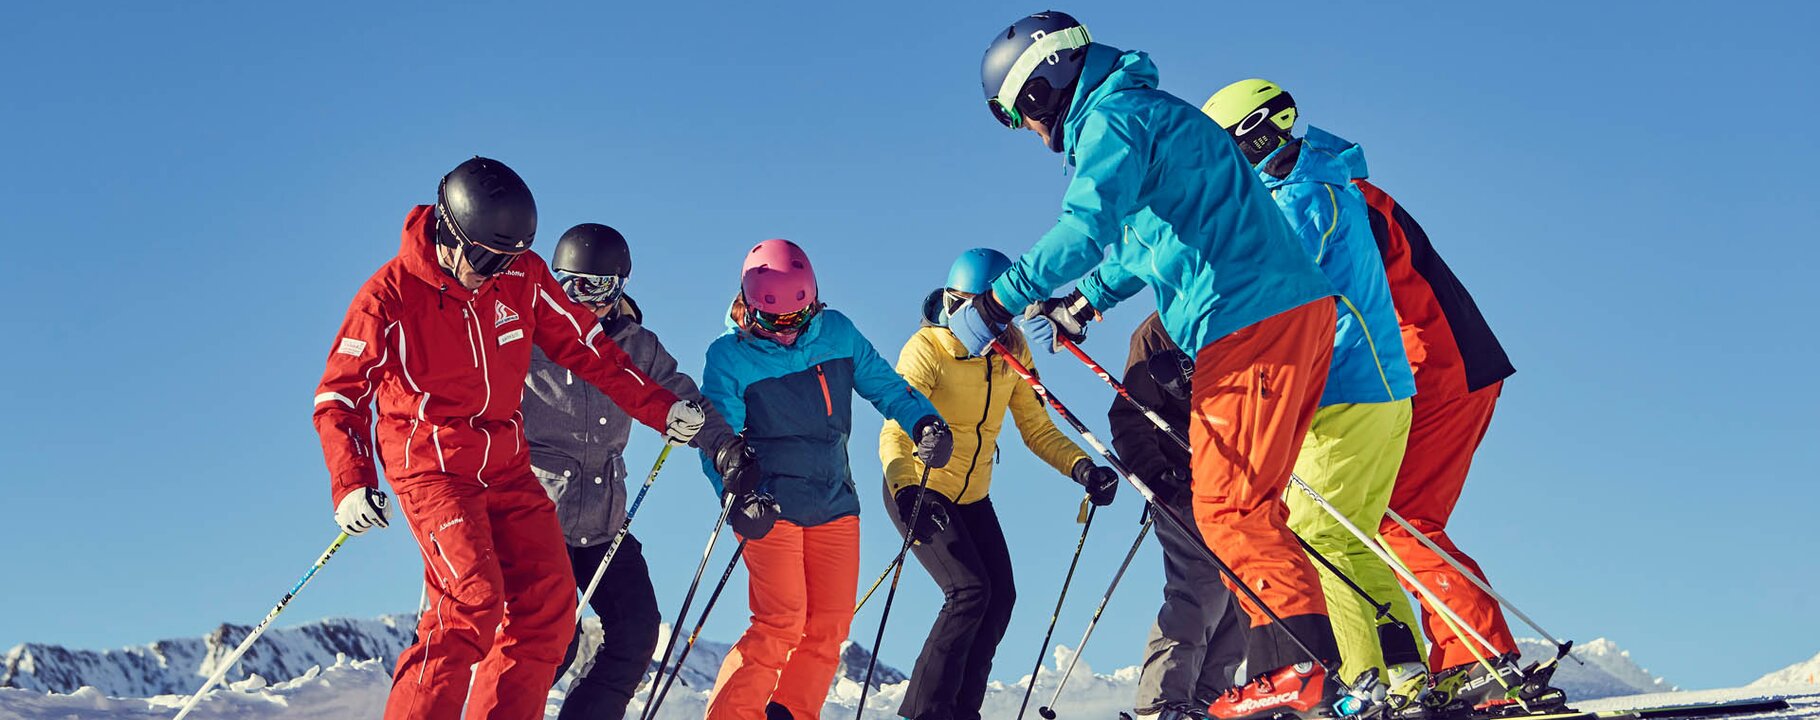 Skikurs für erwachsene Skifahrer in Serfaus-Fiss-Ladis in Tirol | © Skischule Serfaus - christianwaldegger.com